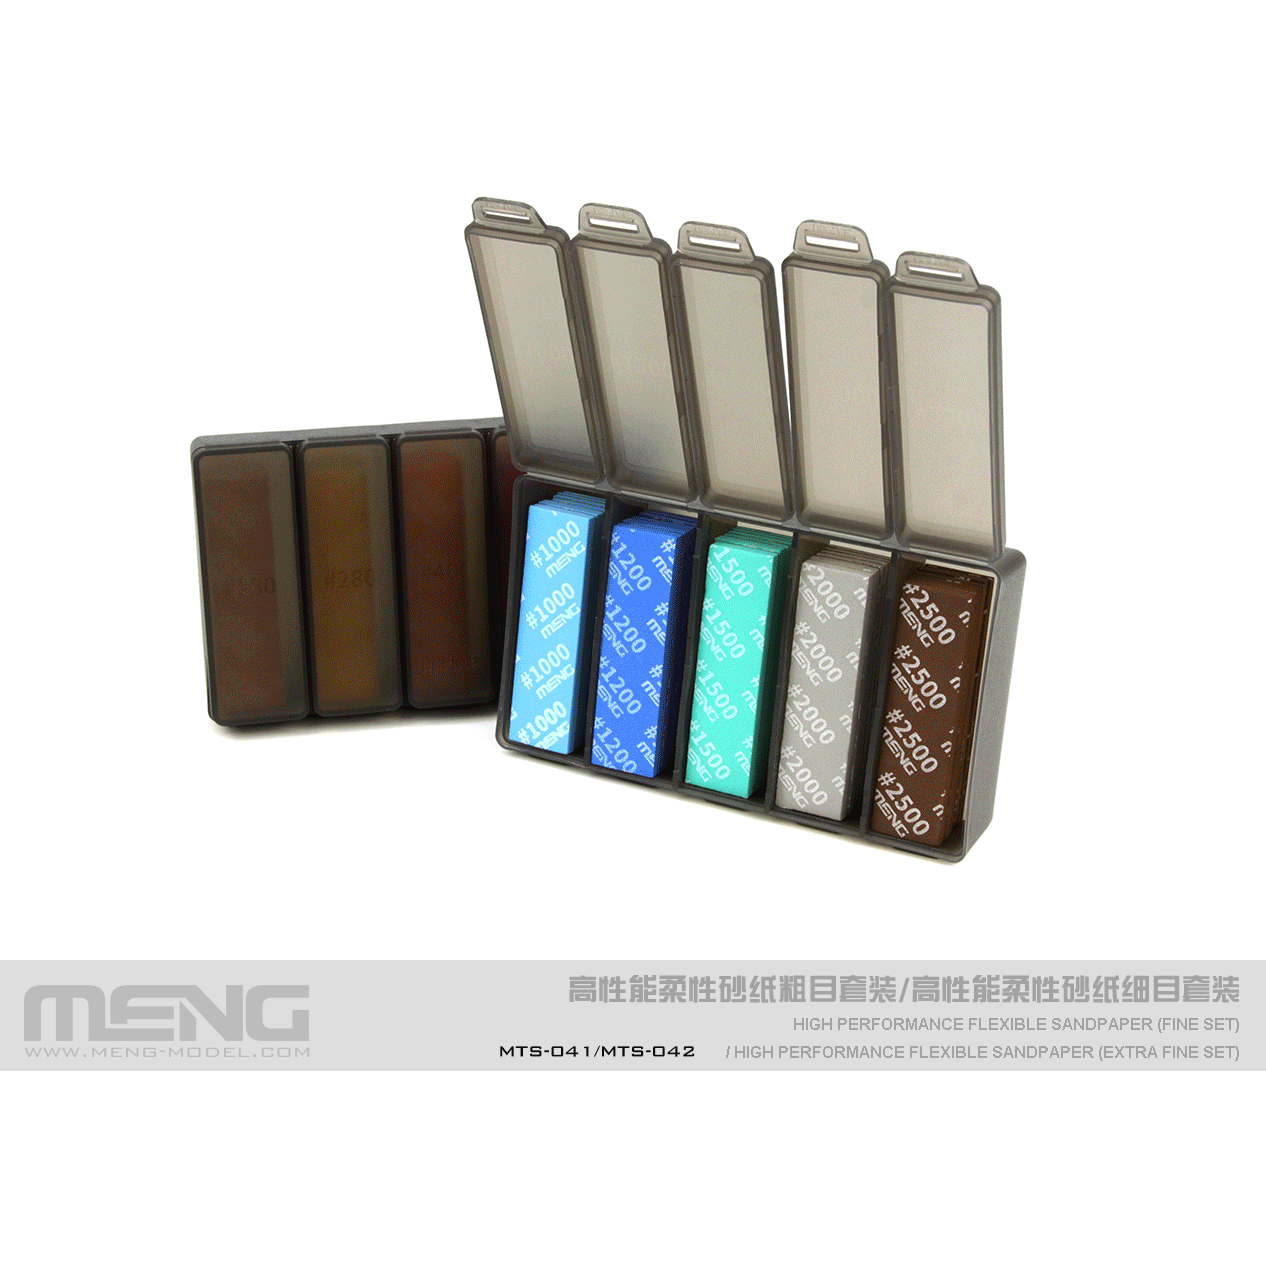 Meng High Performance Flexible Sandpaper, Extra Fine Set - 30Pcs MTS-042